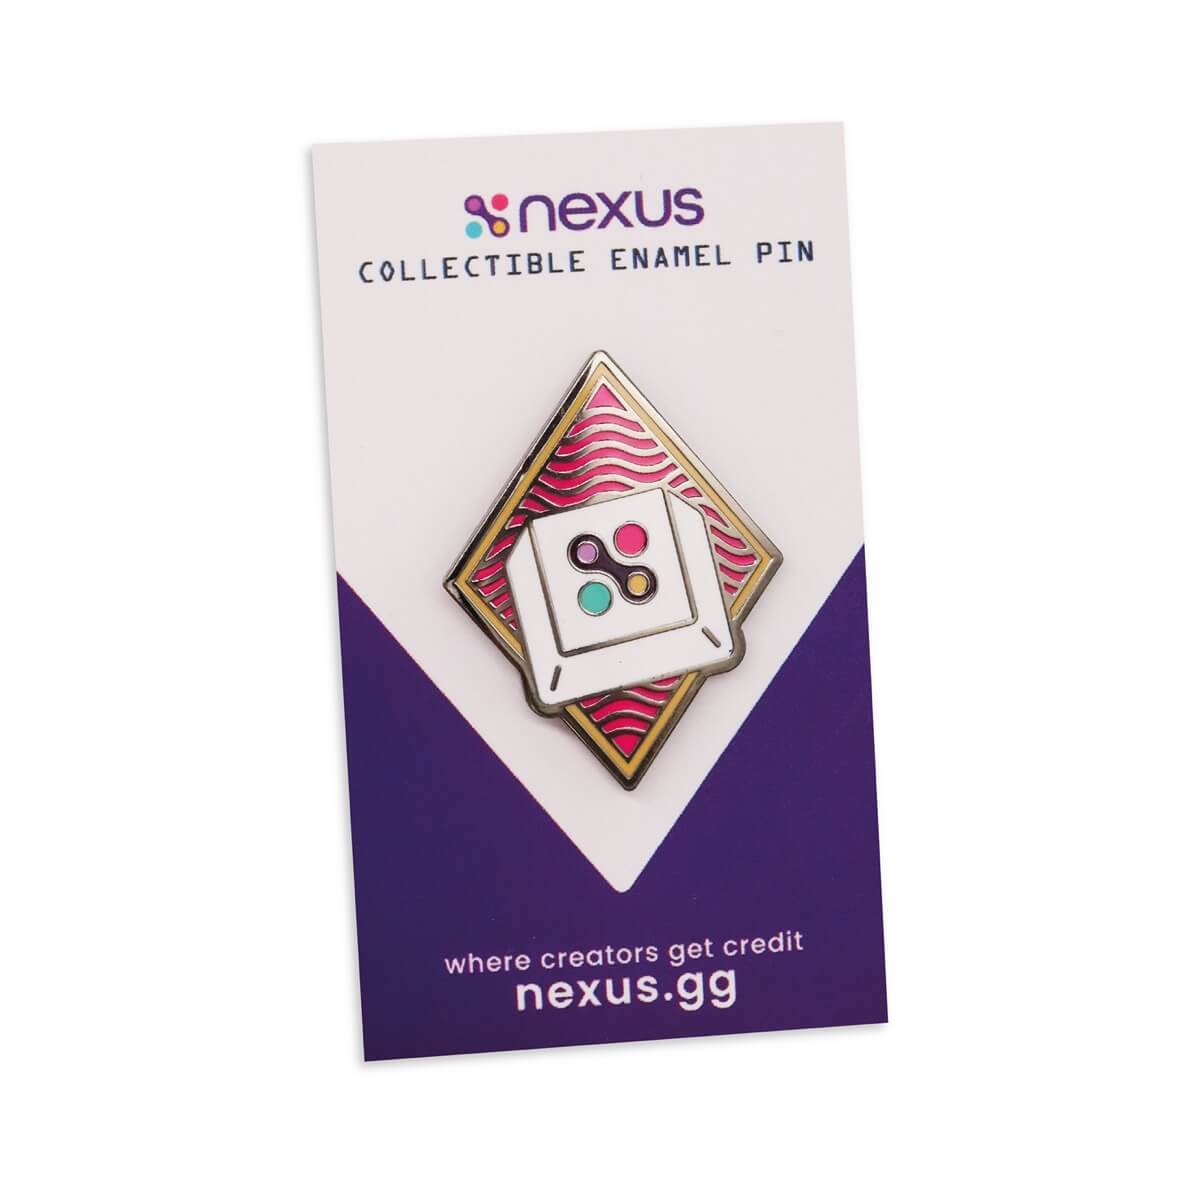 A nexus collectable enamel pin on a backing card